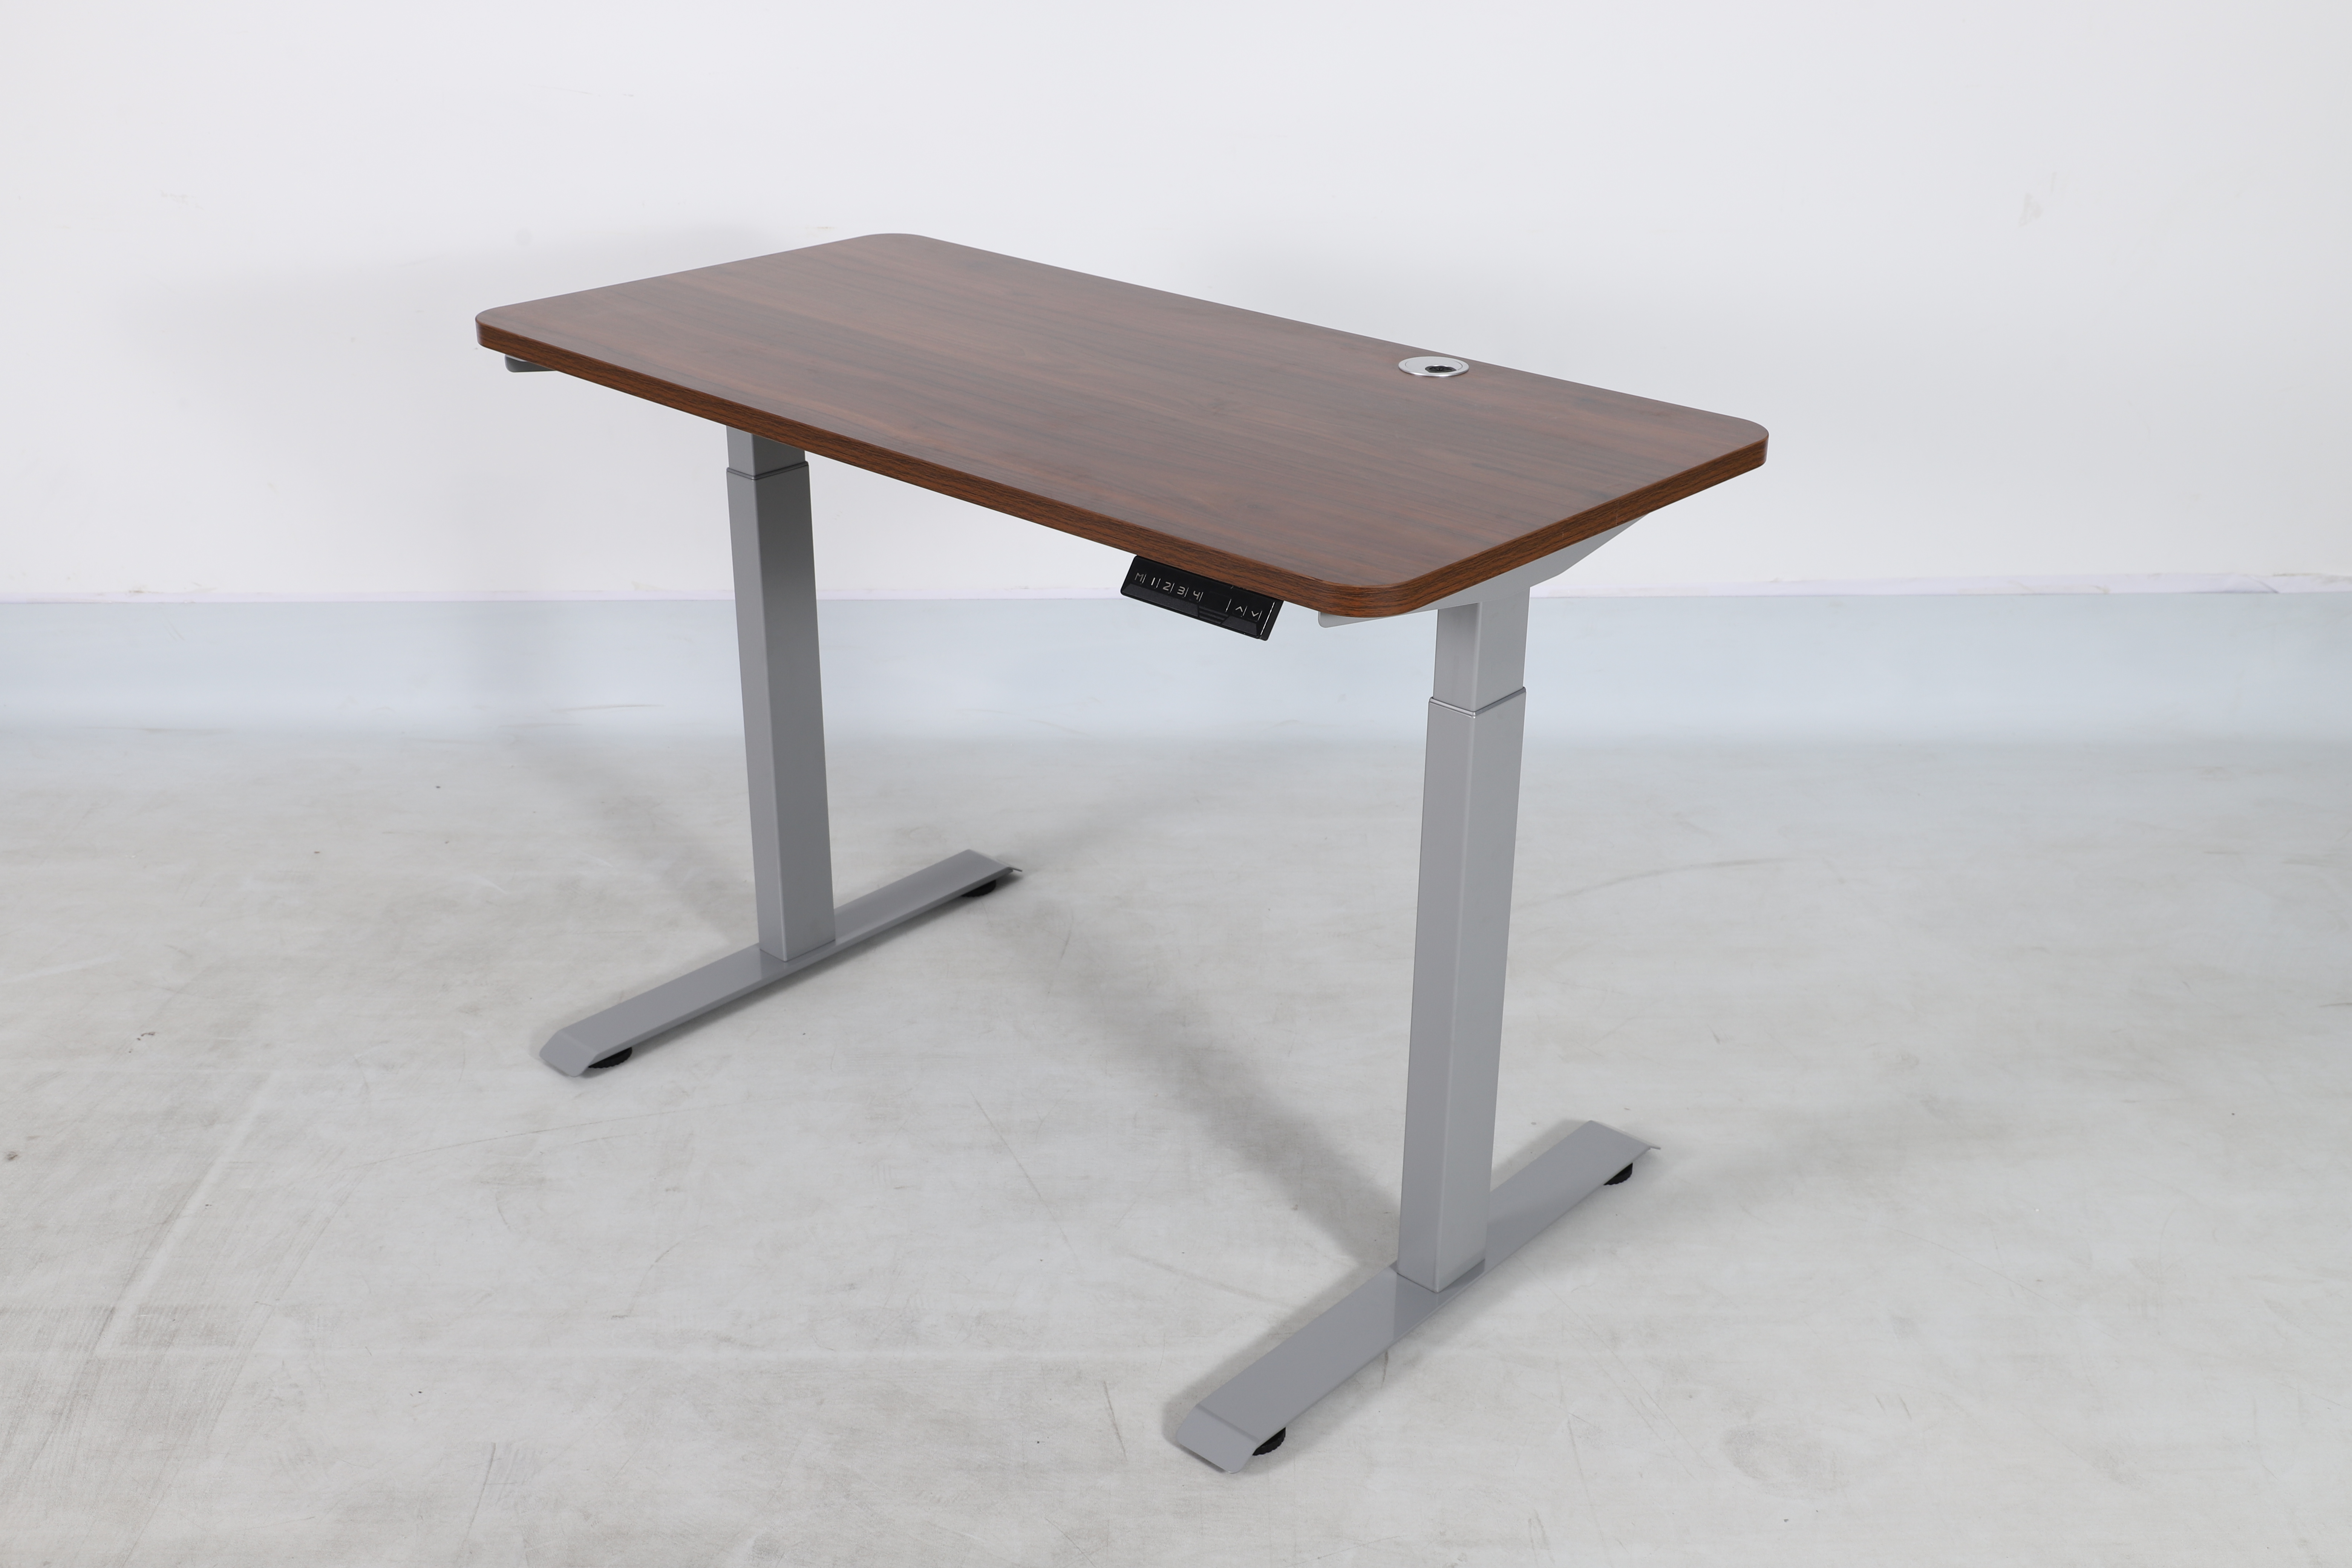 NT33-2A2 Electric Office Furniture Intelligent Adjustable Stand up Desk